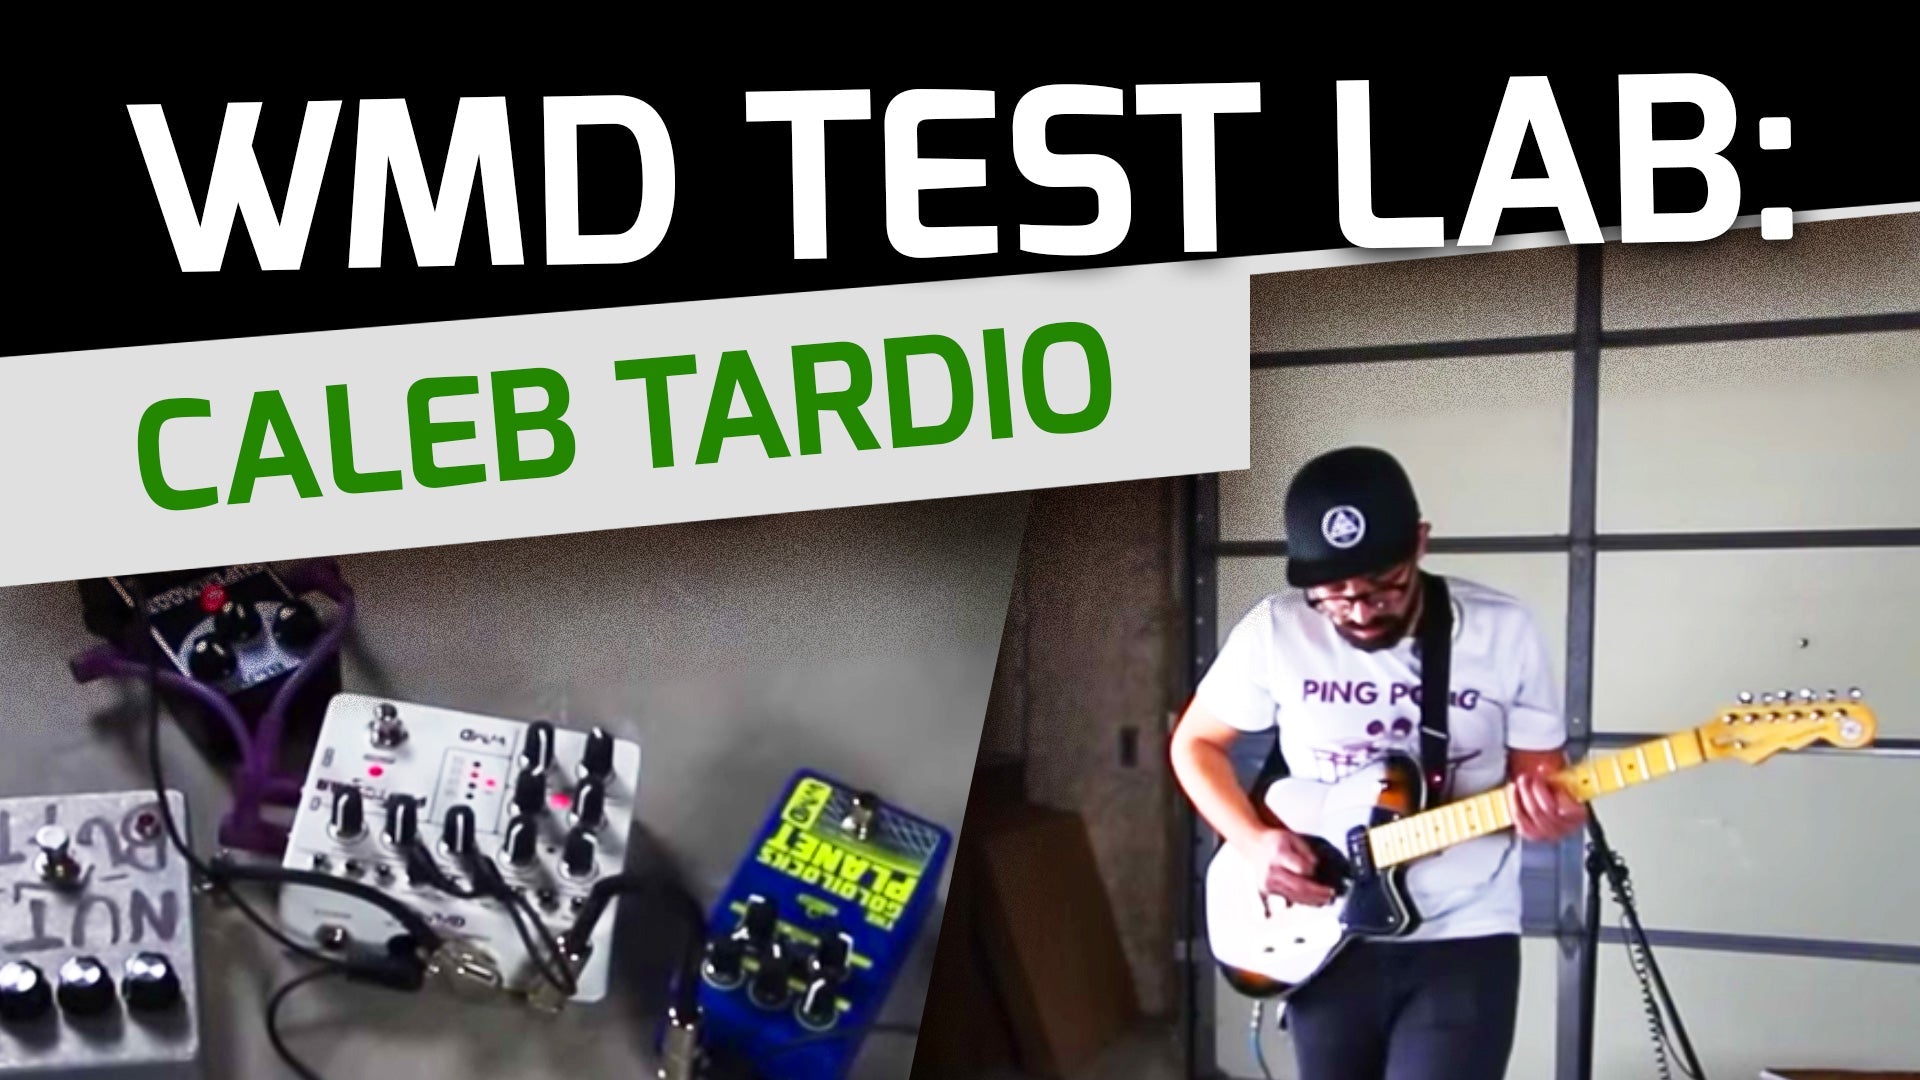 New WMD Test Lab Performance featuring Caleb Tardio